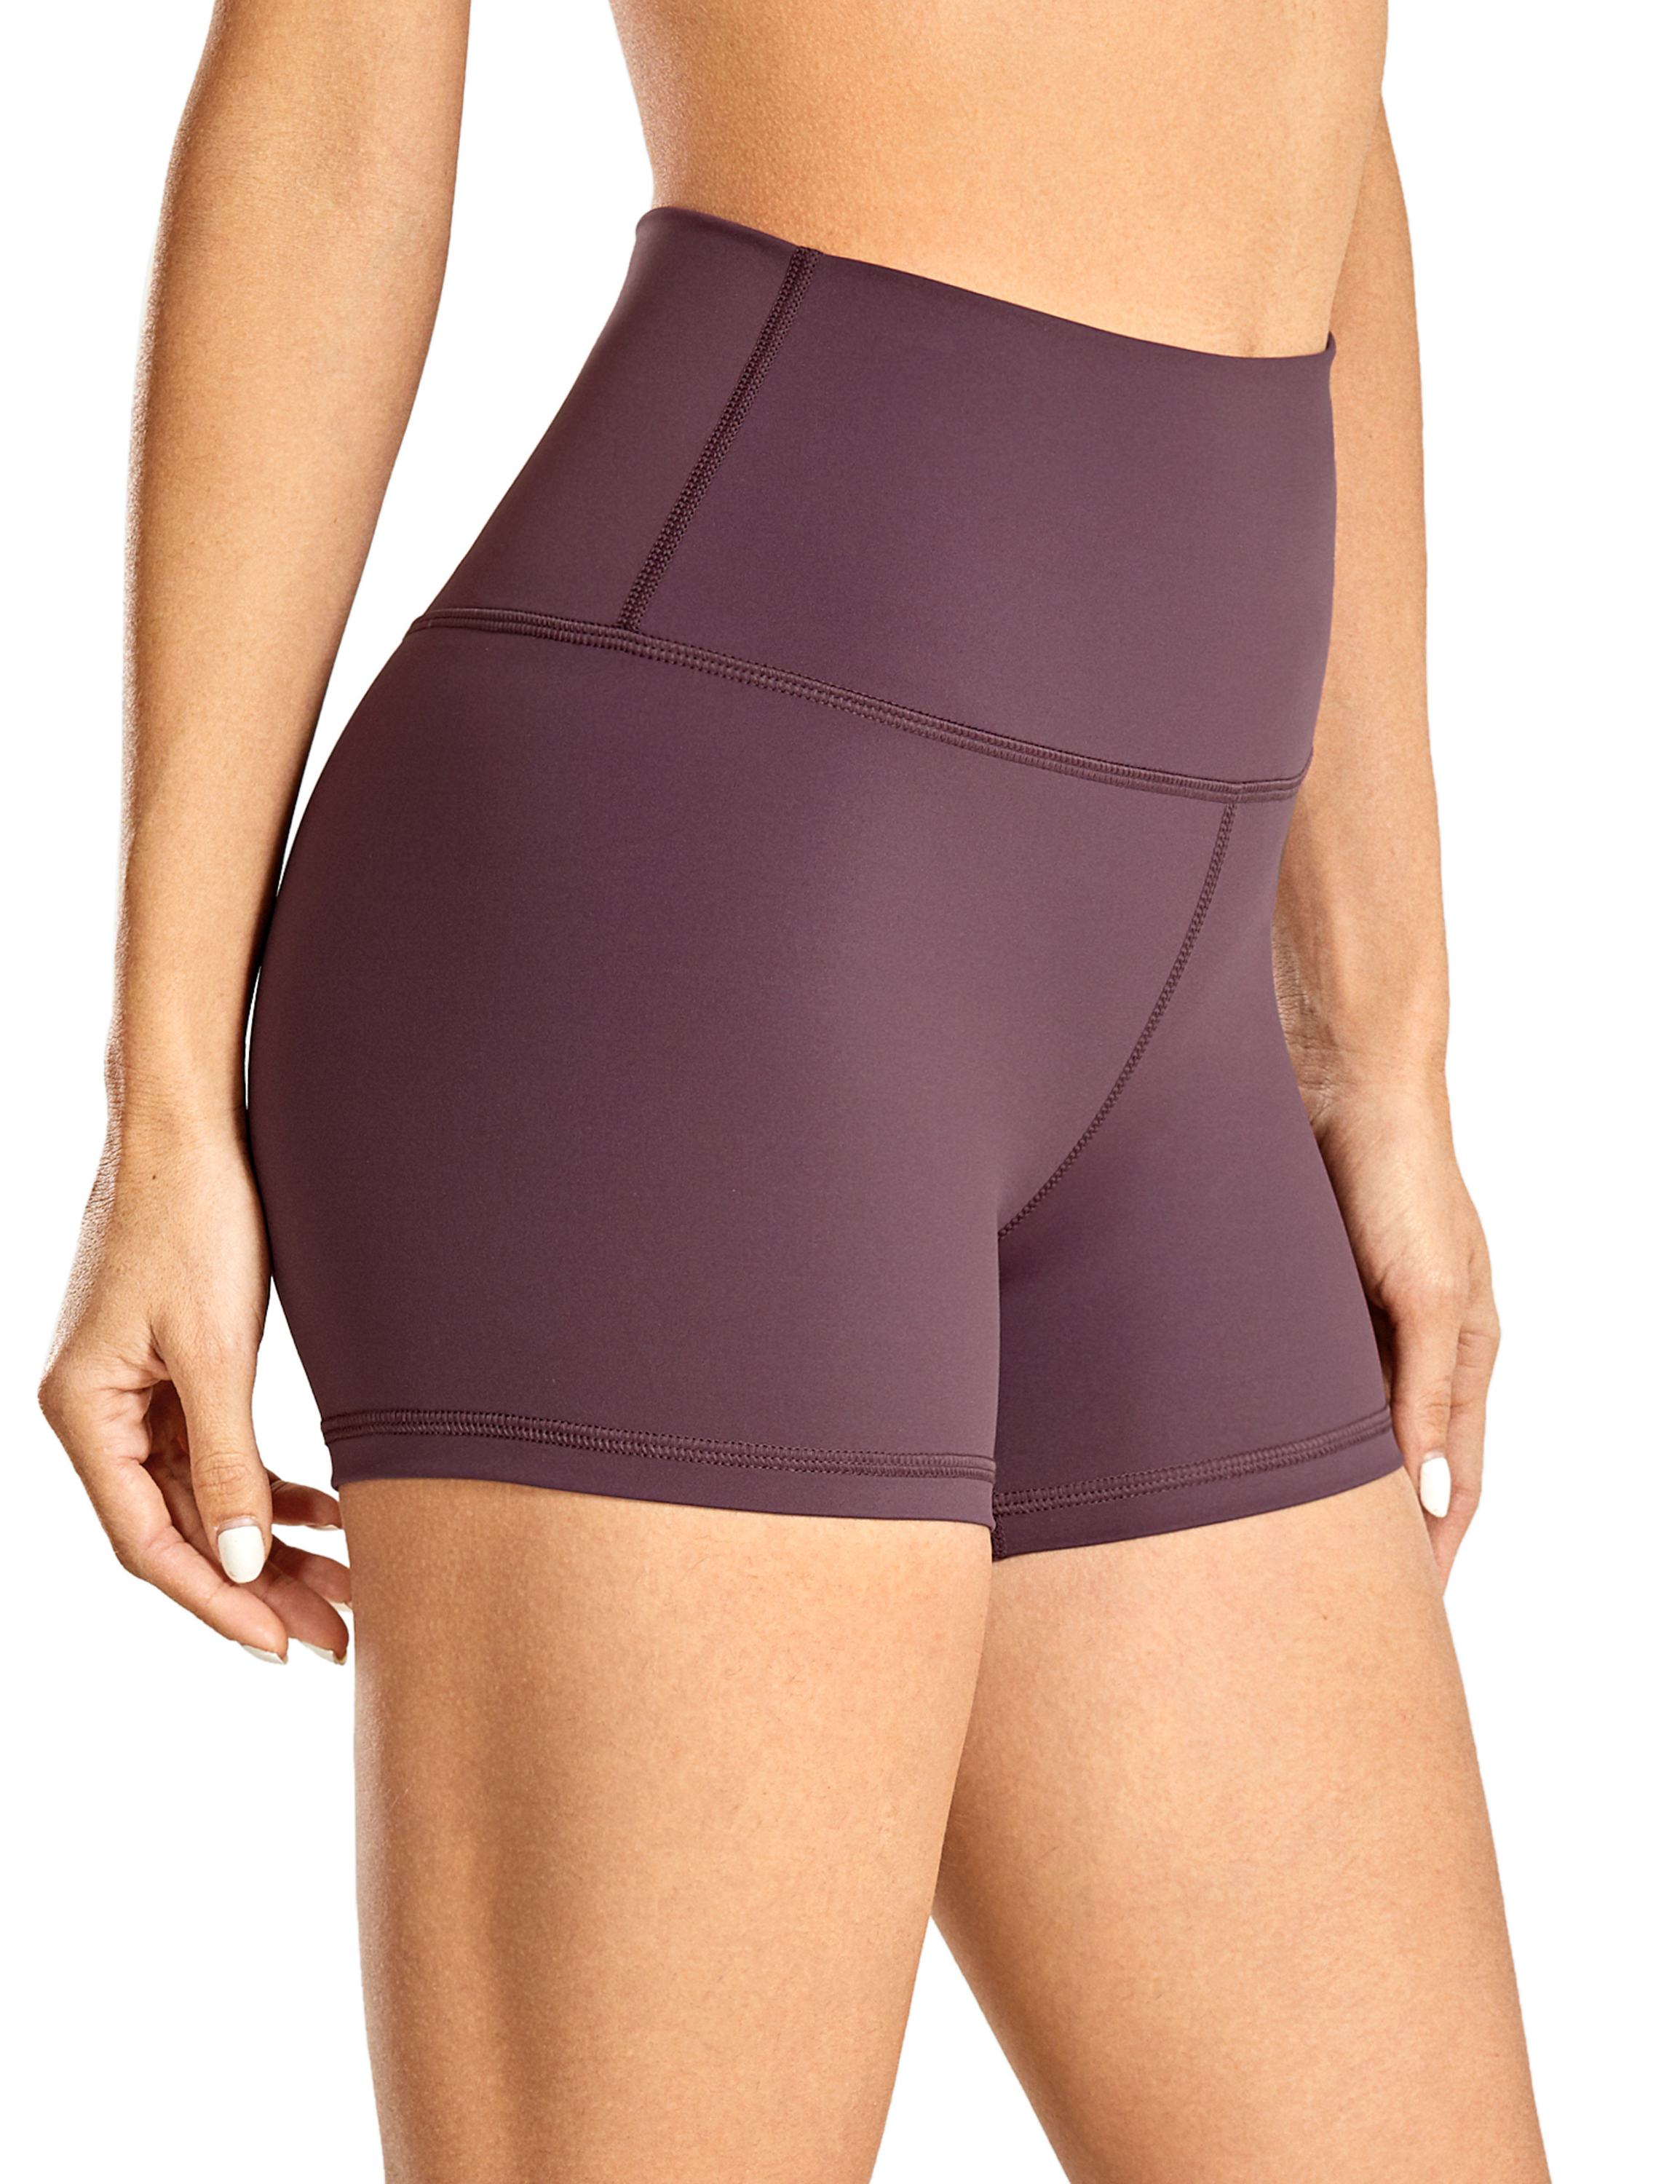 CRZ YOGA Womens Workout Shorts High Waist Yoga Biker Shorts Athletic Running Shorts with Pockets Naked Feeling 10 Inches 